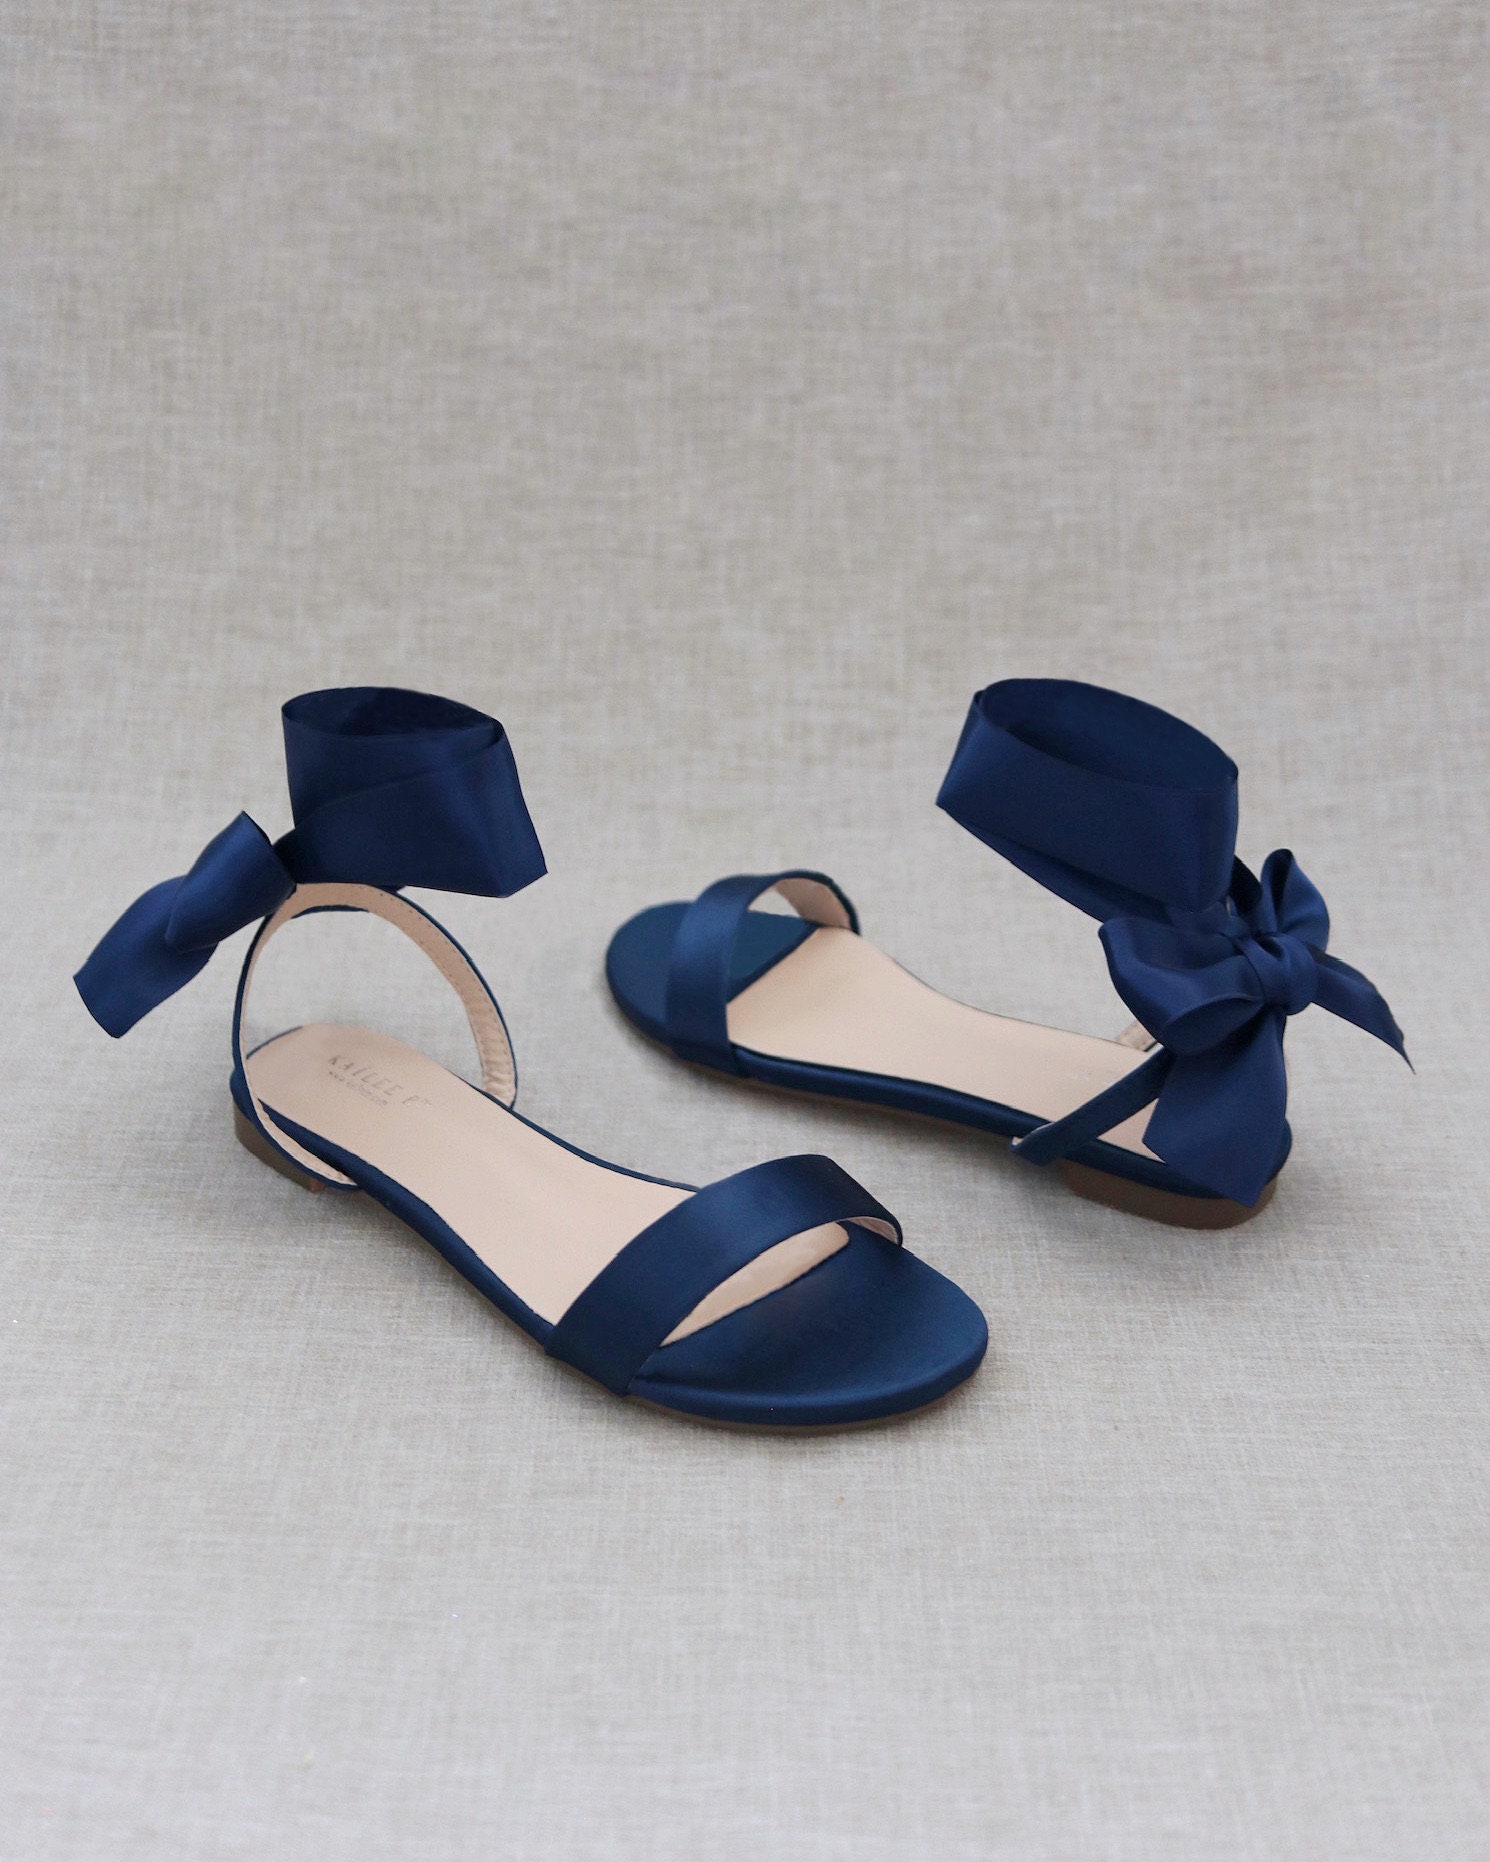 Dream Pairs Women's Sandals Comfort Summer Shoes For Girls Womens Flat  Platform Wedge Sandals Size 5.5 B(M) US Florida Navy - Walmart.com